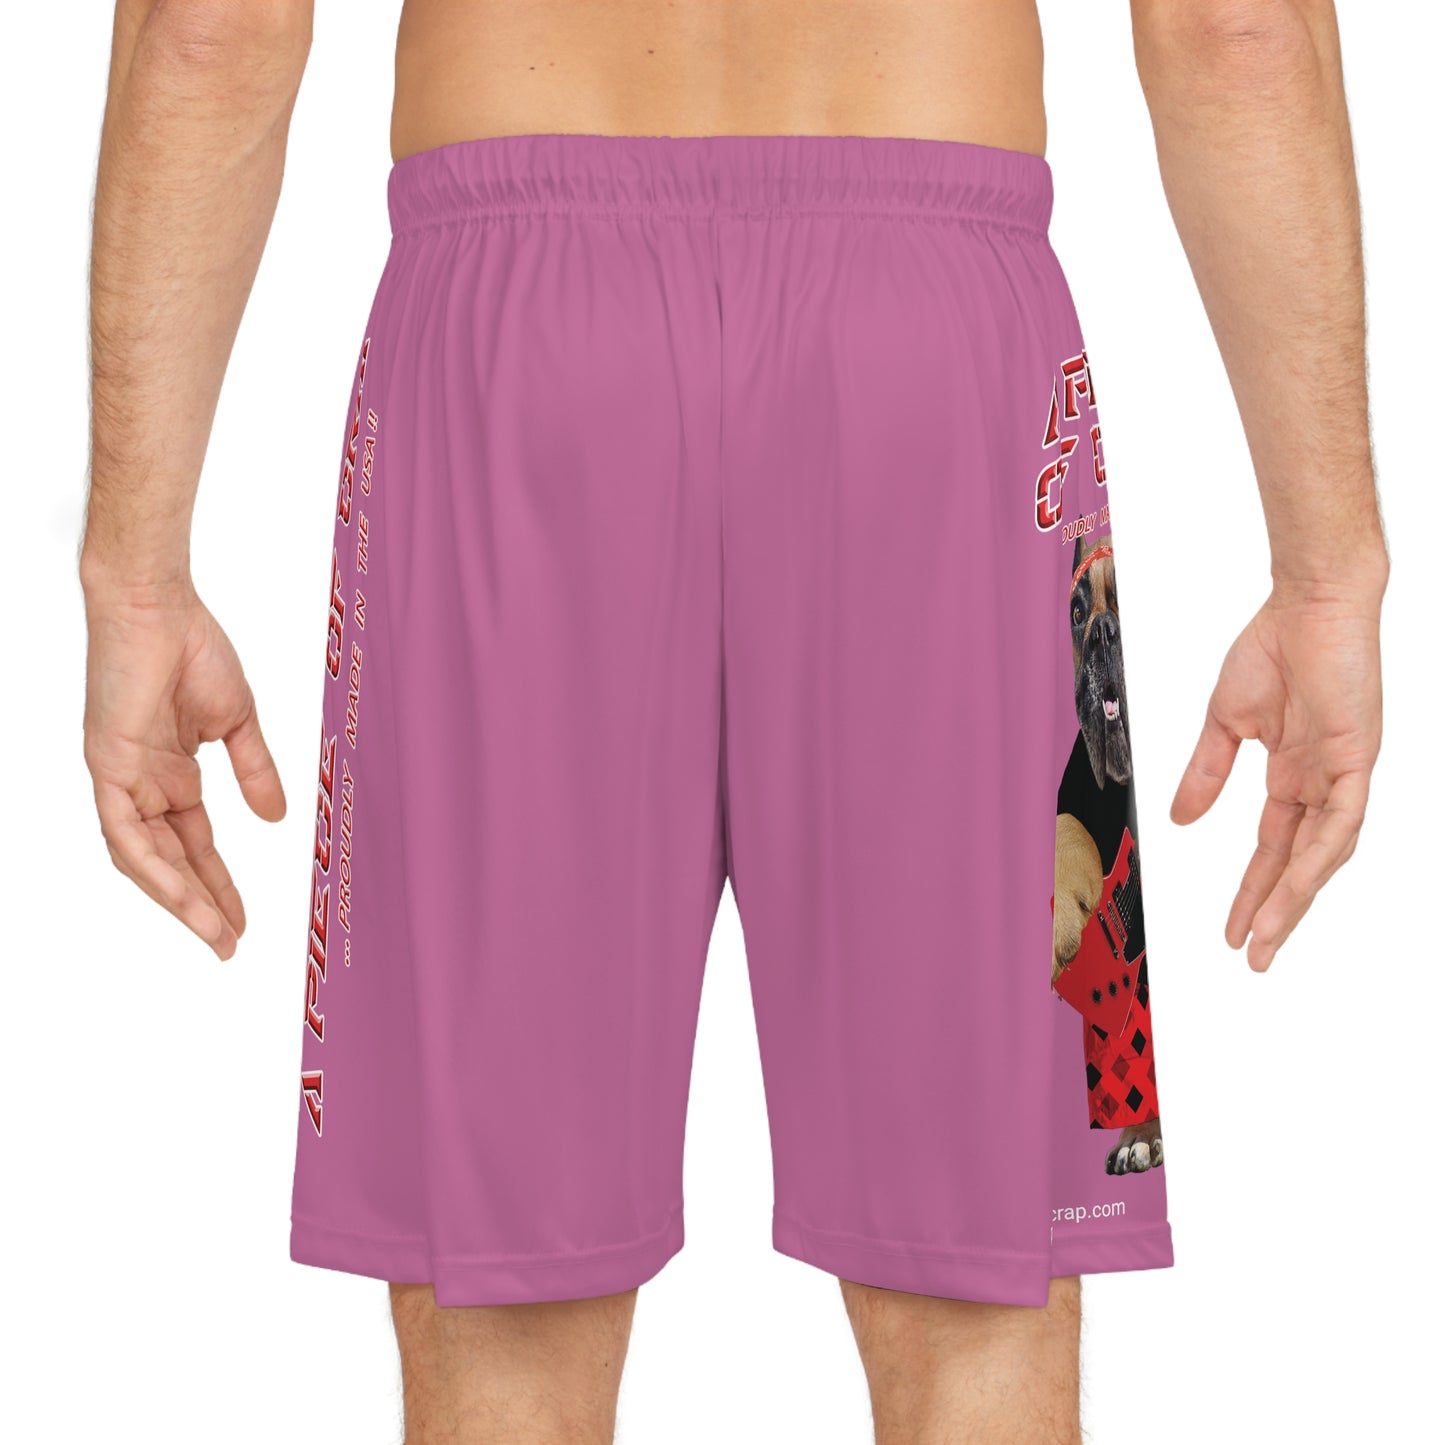 A Piece Of Crap II Basketball Shorts - Light Pink